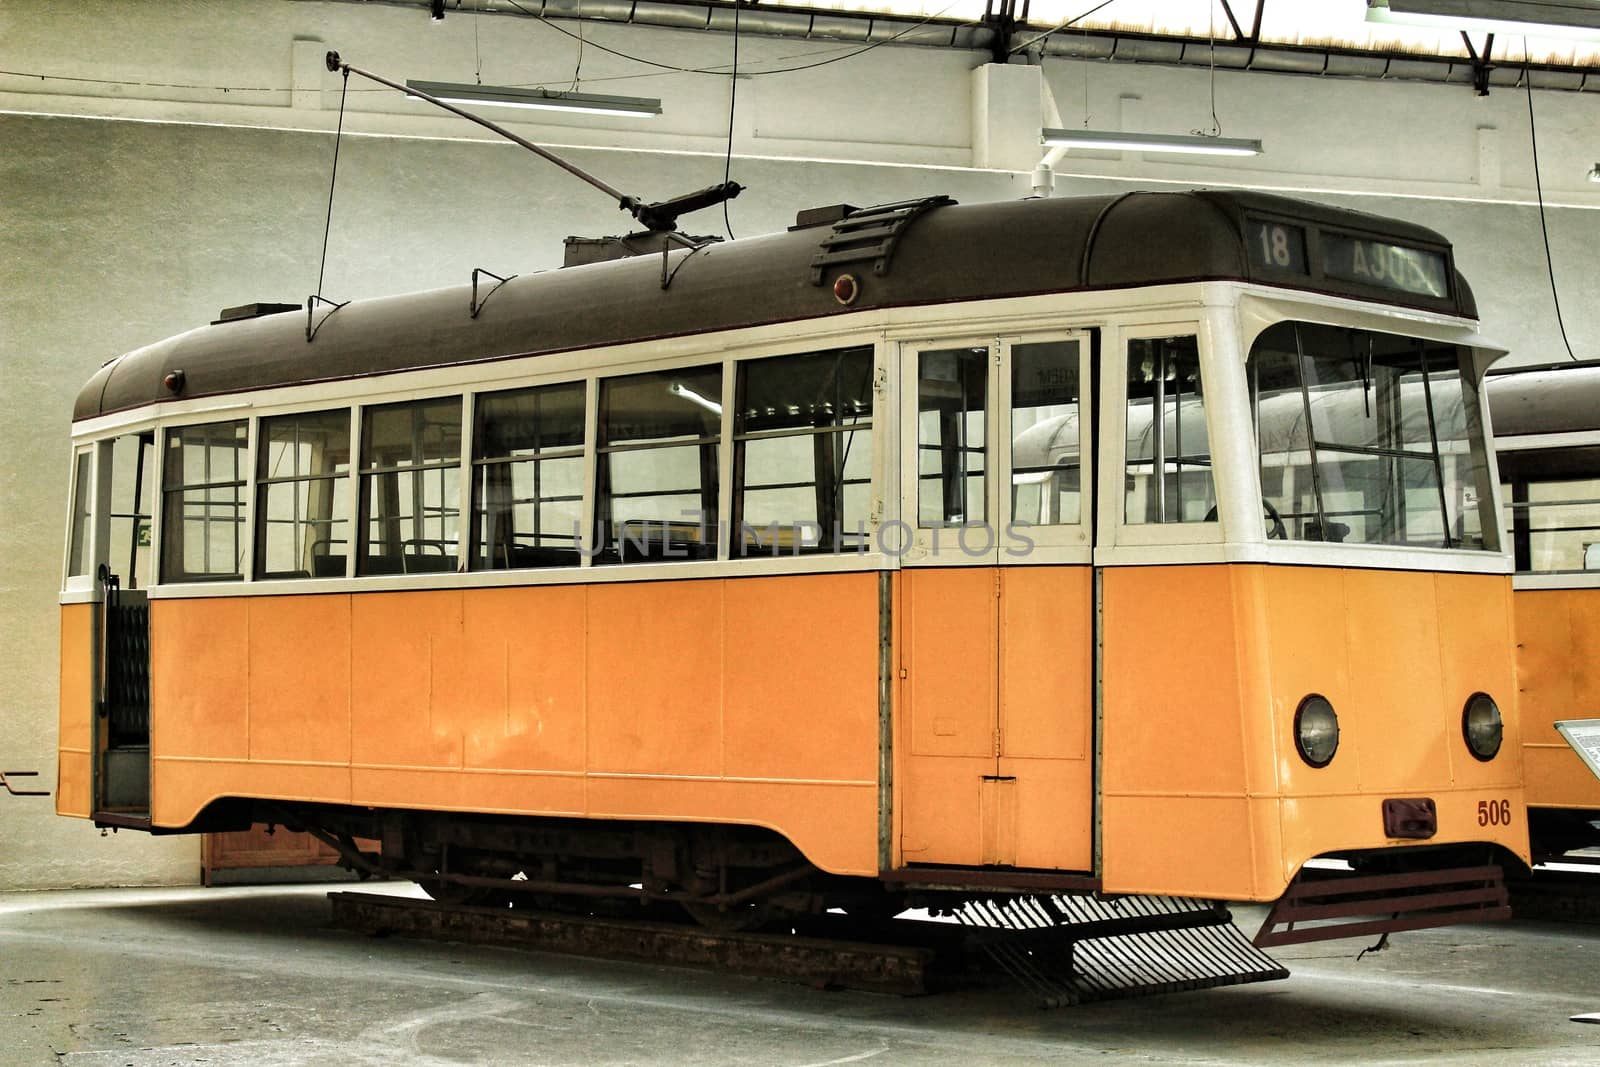 Old vintage trams in Lisbon by soniabonet